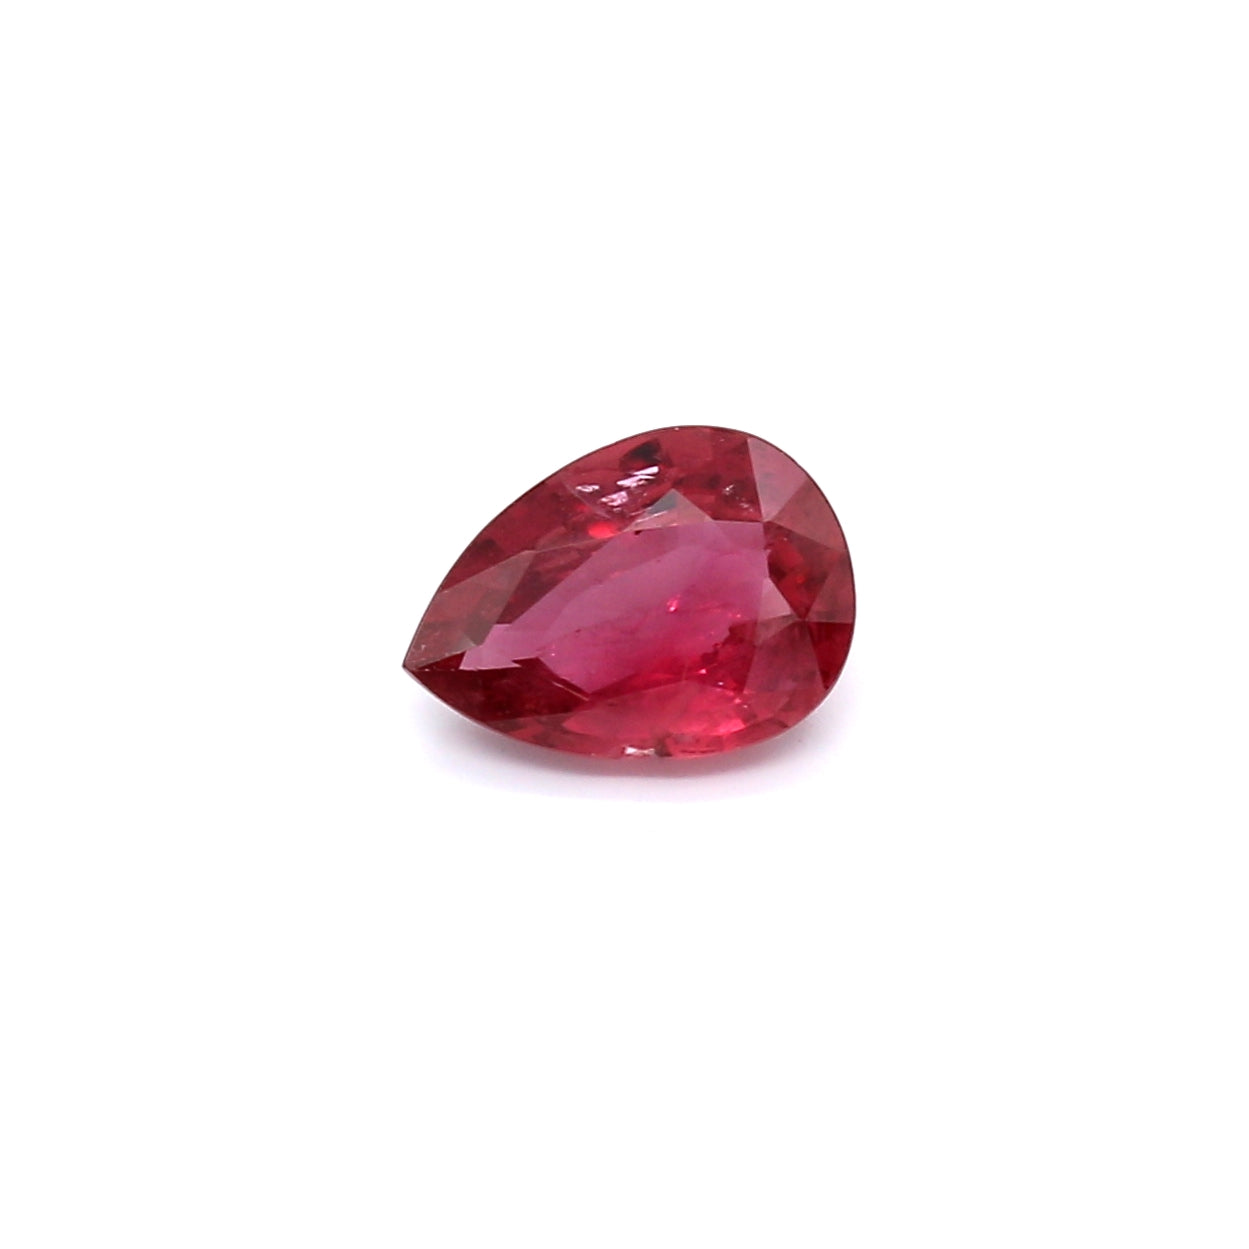 1.07ct Purplish Red, Pear Shape Ruby, H(a), Thailand - 8.03 x 5.76 x 2.88mm